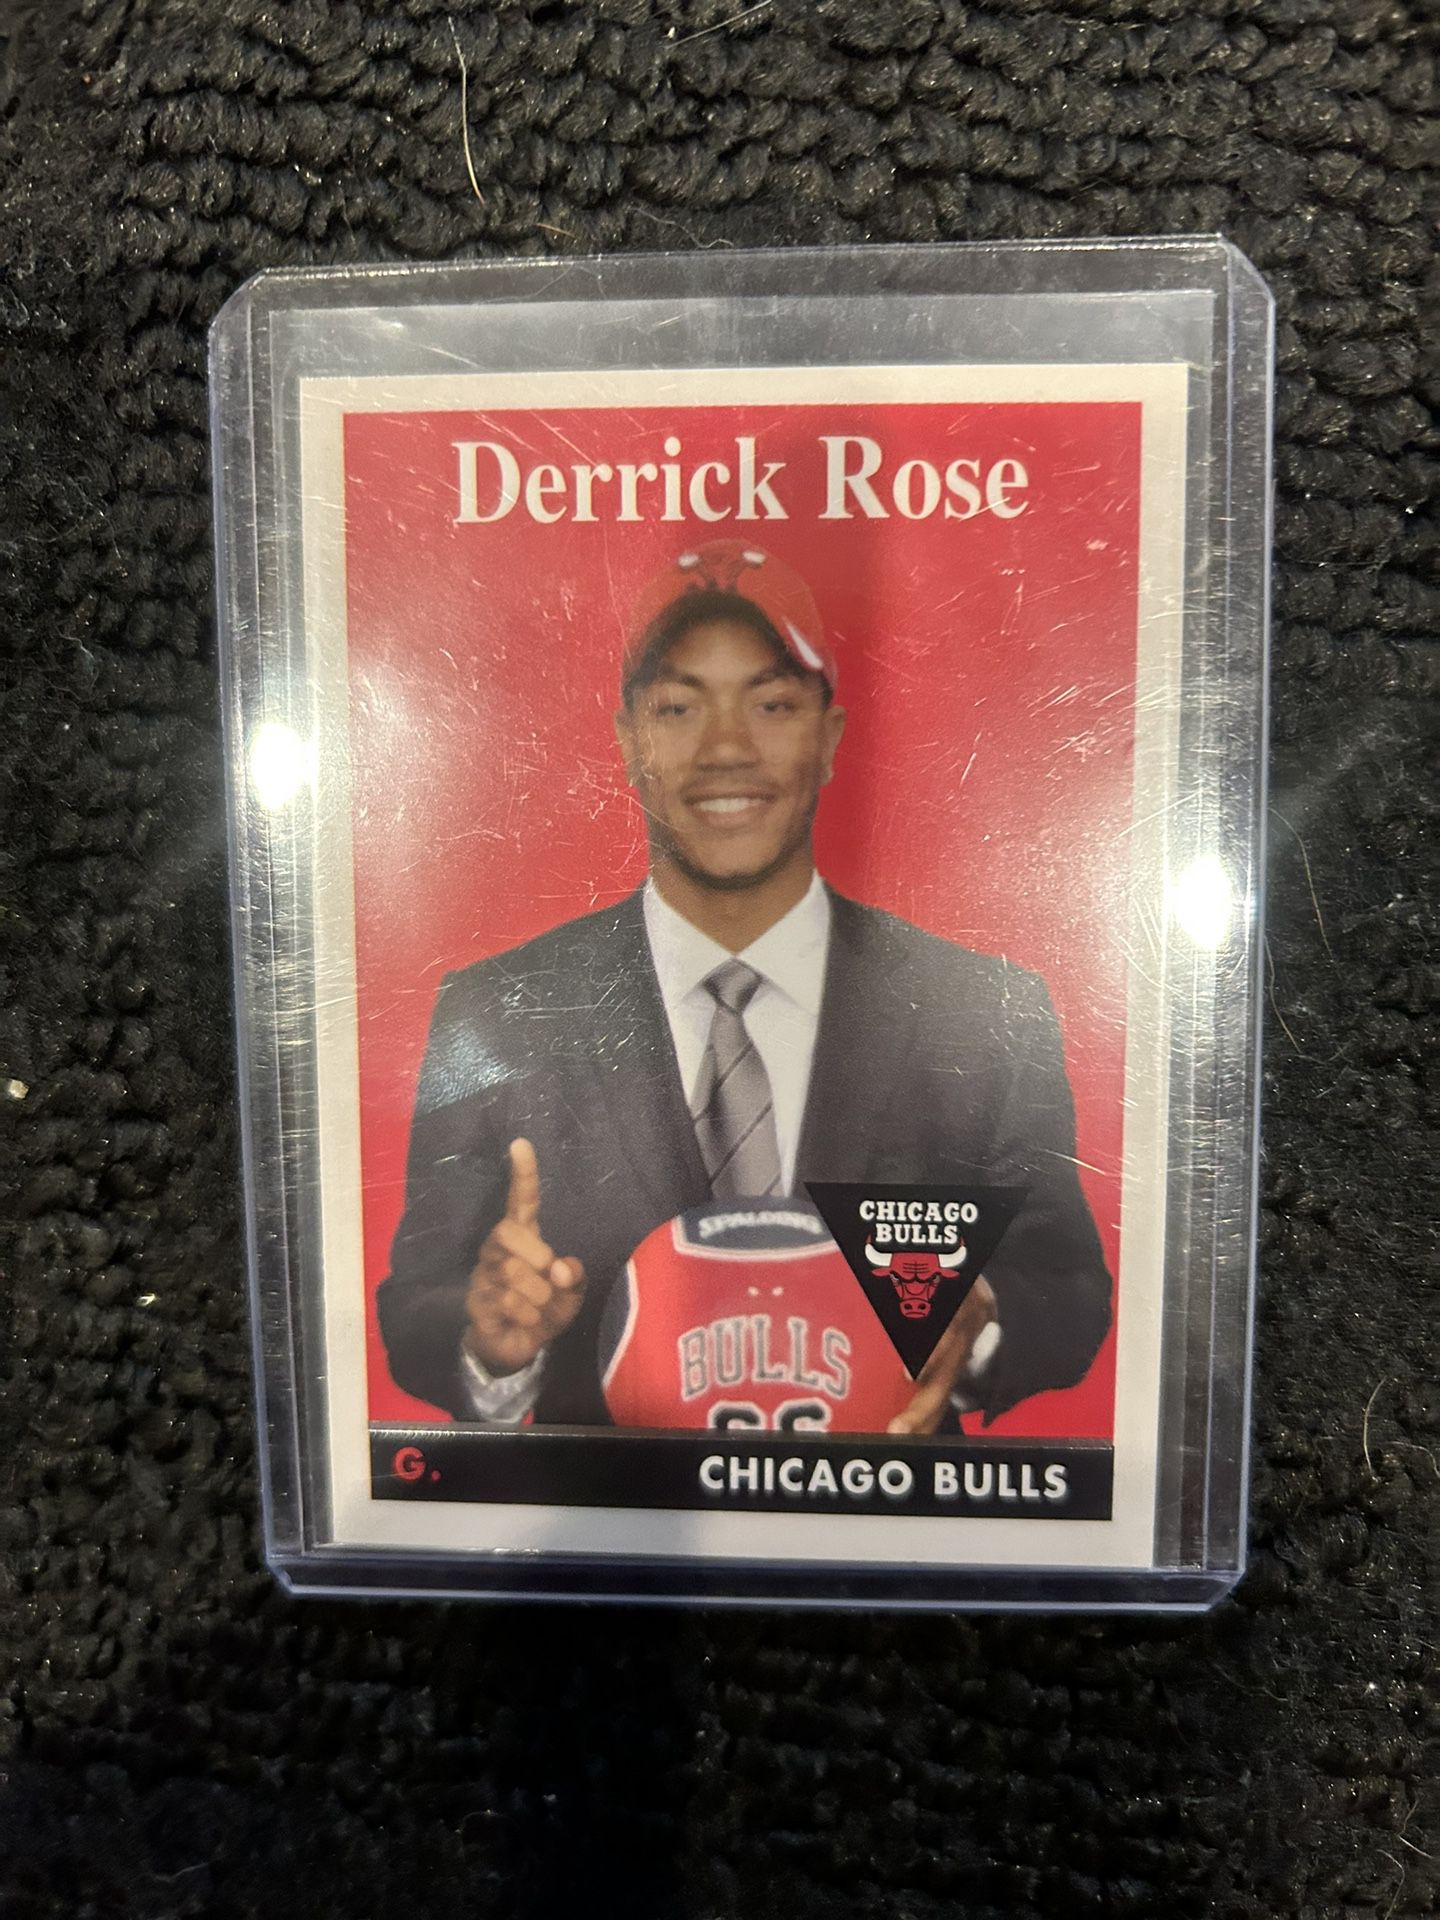 Derrick Rose rookie